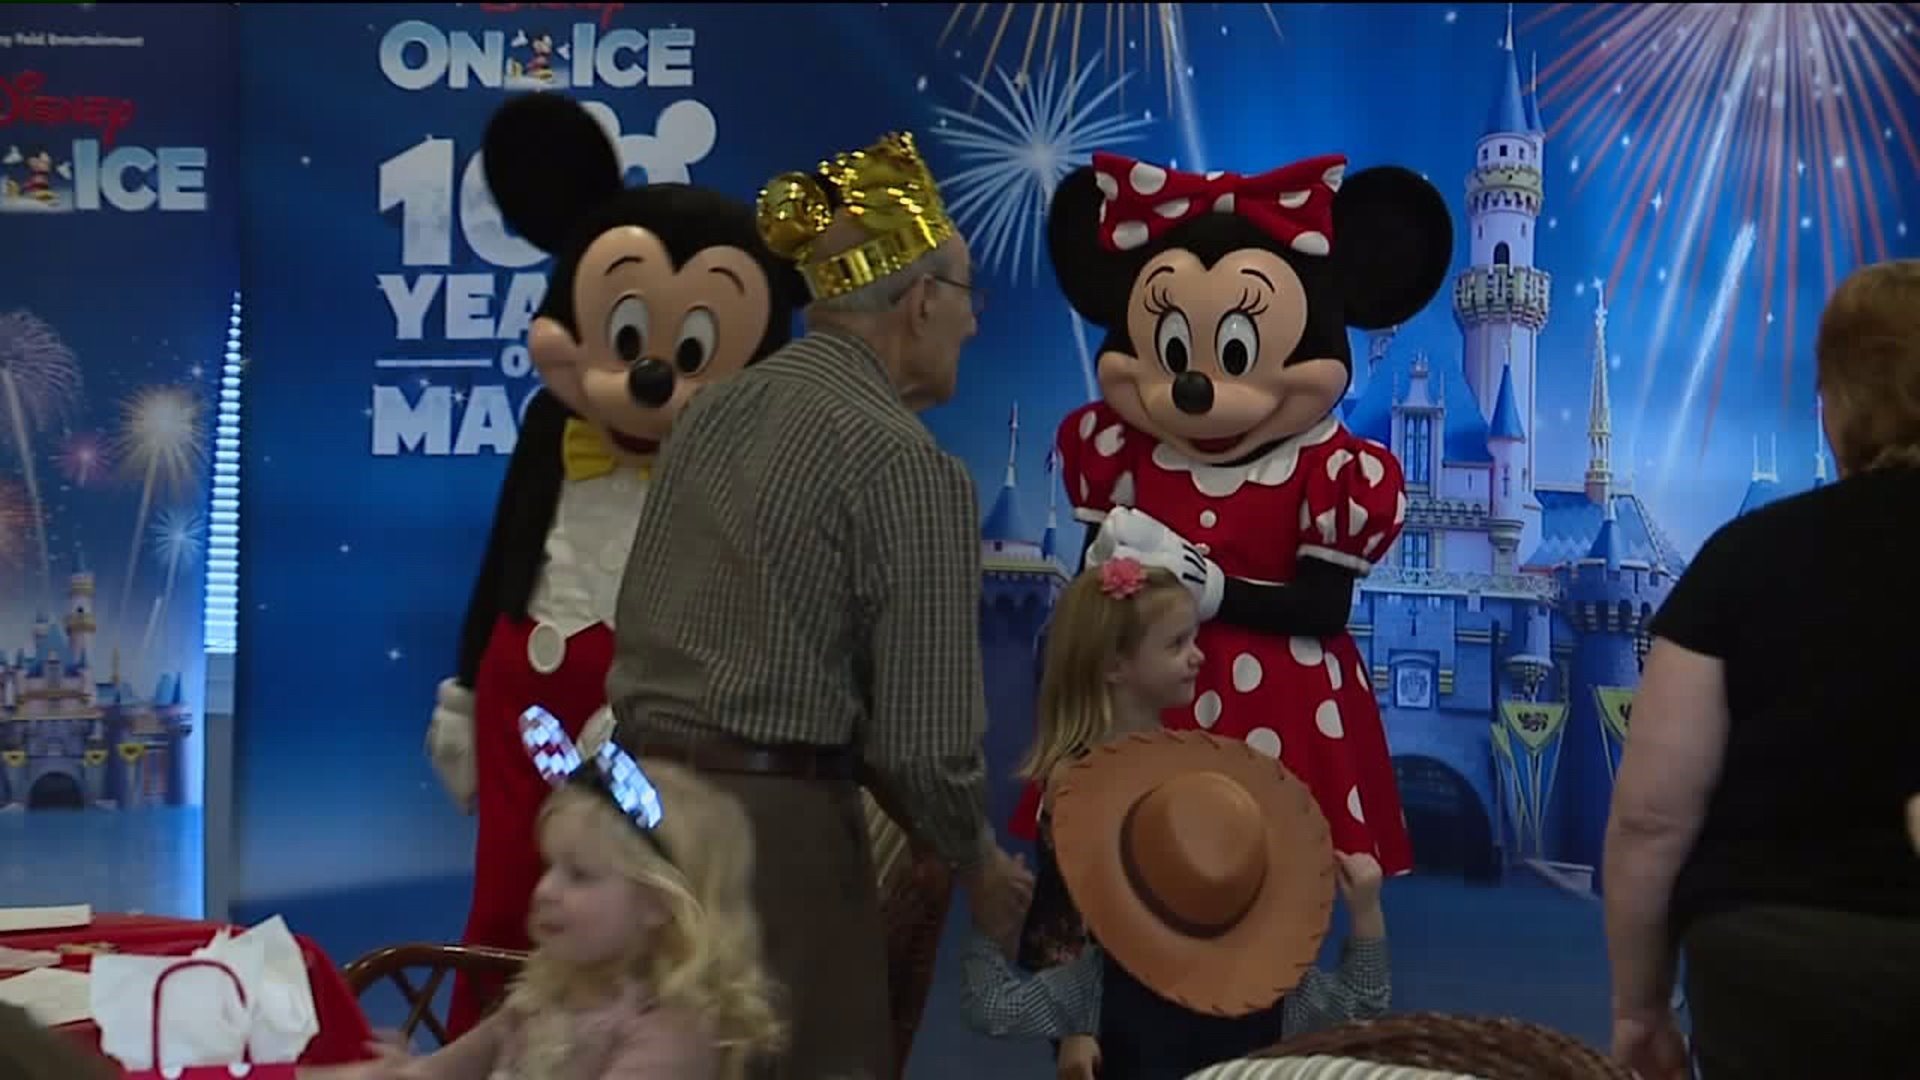 Senior Living Residents Get Visit from Disney on Ice Cast